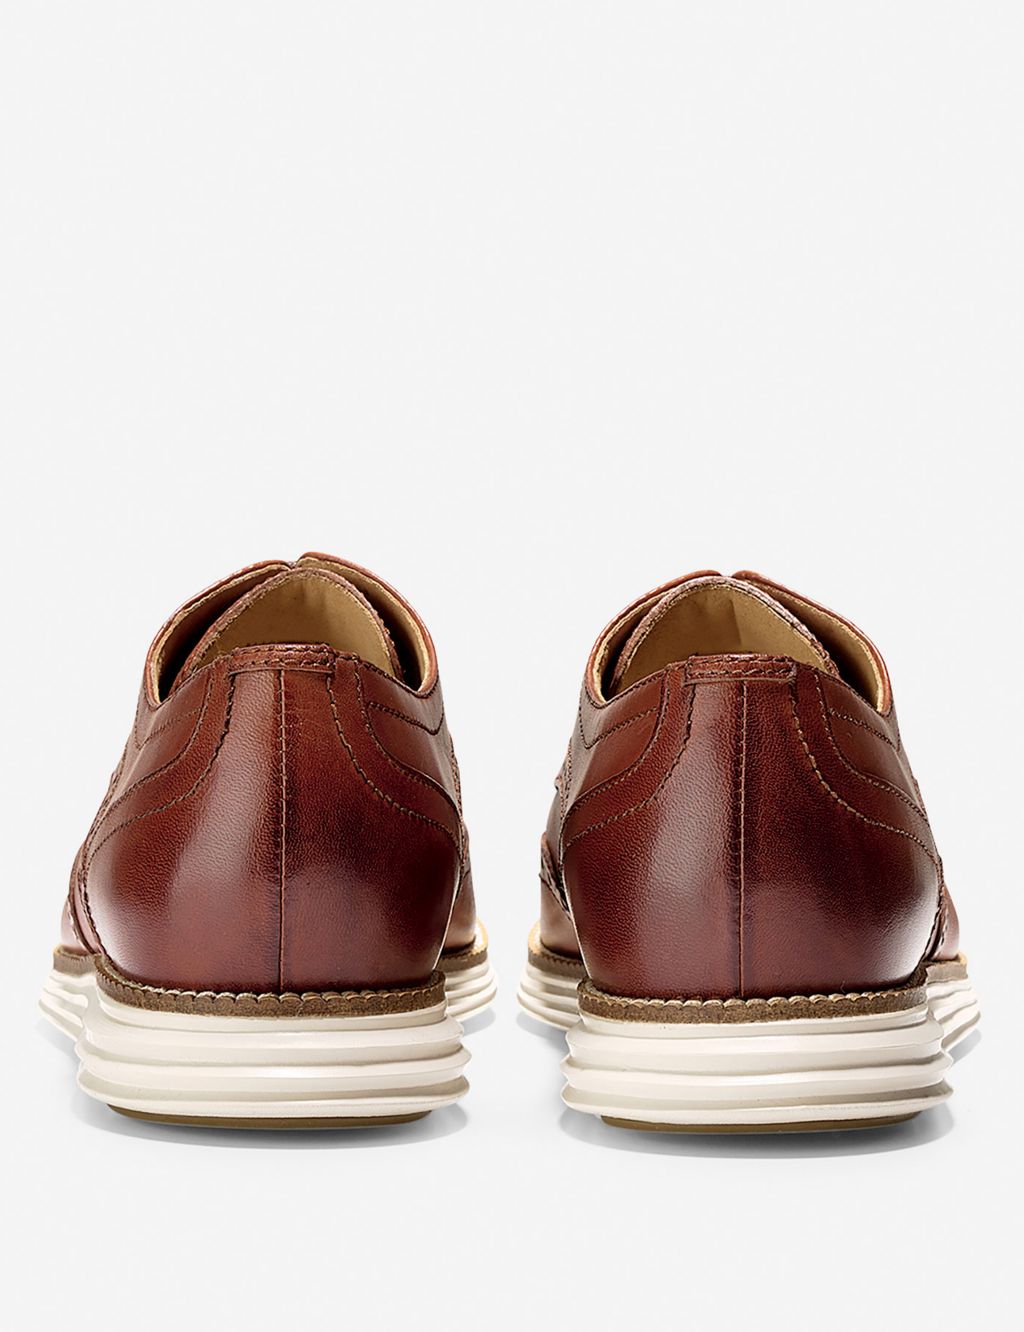 Originalgrand Leather Oxford Shoes image 3